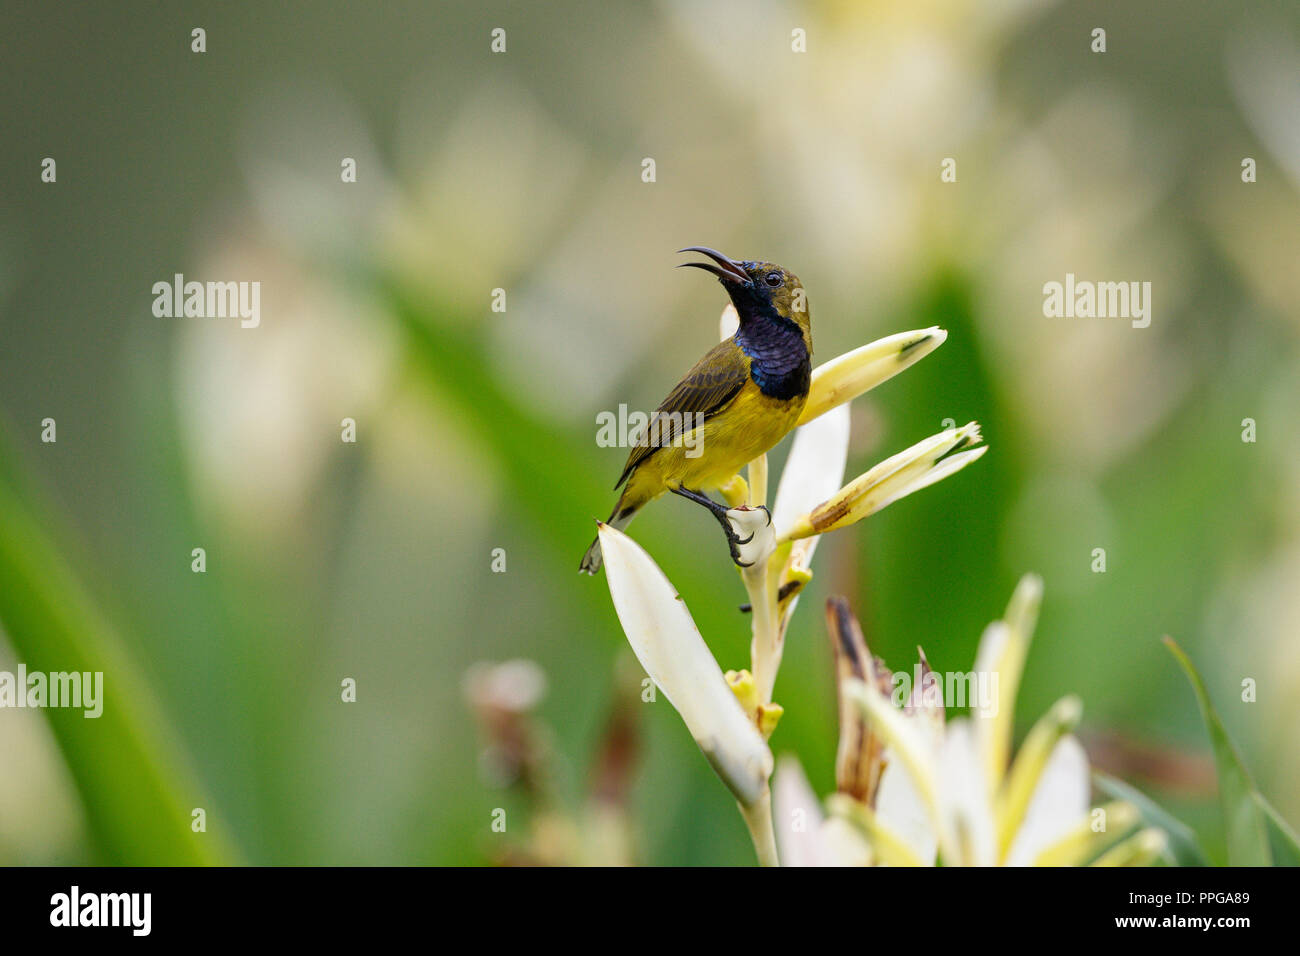 Olive-Backed Sunbird feeding on nectar from flower in Singapore Botanic Gardens Stock Photo